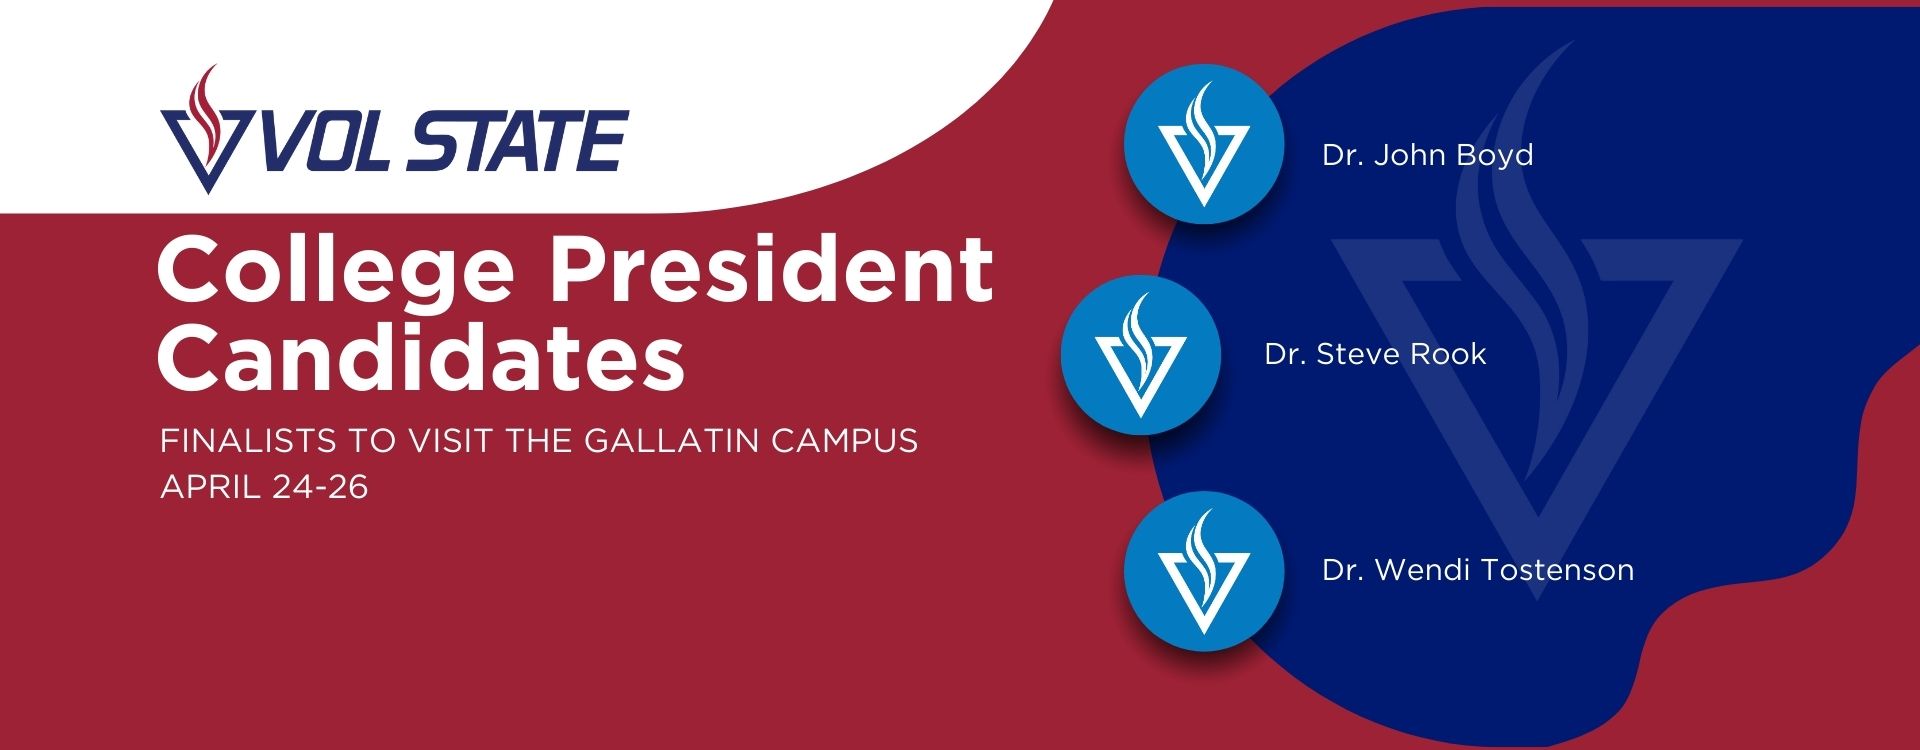 College President Candidates slideshow image